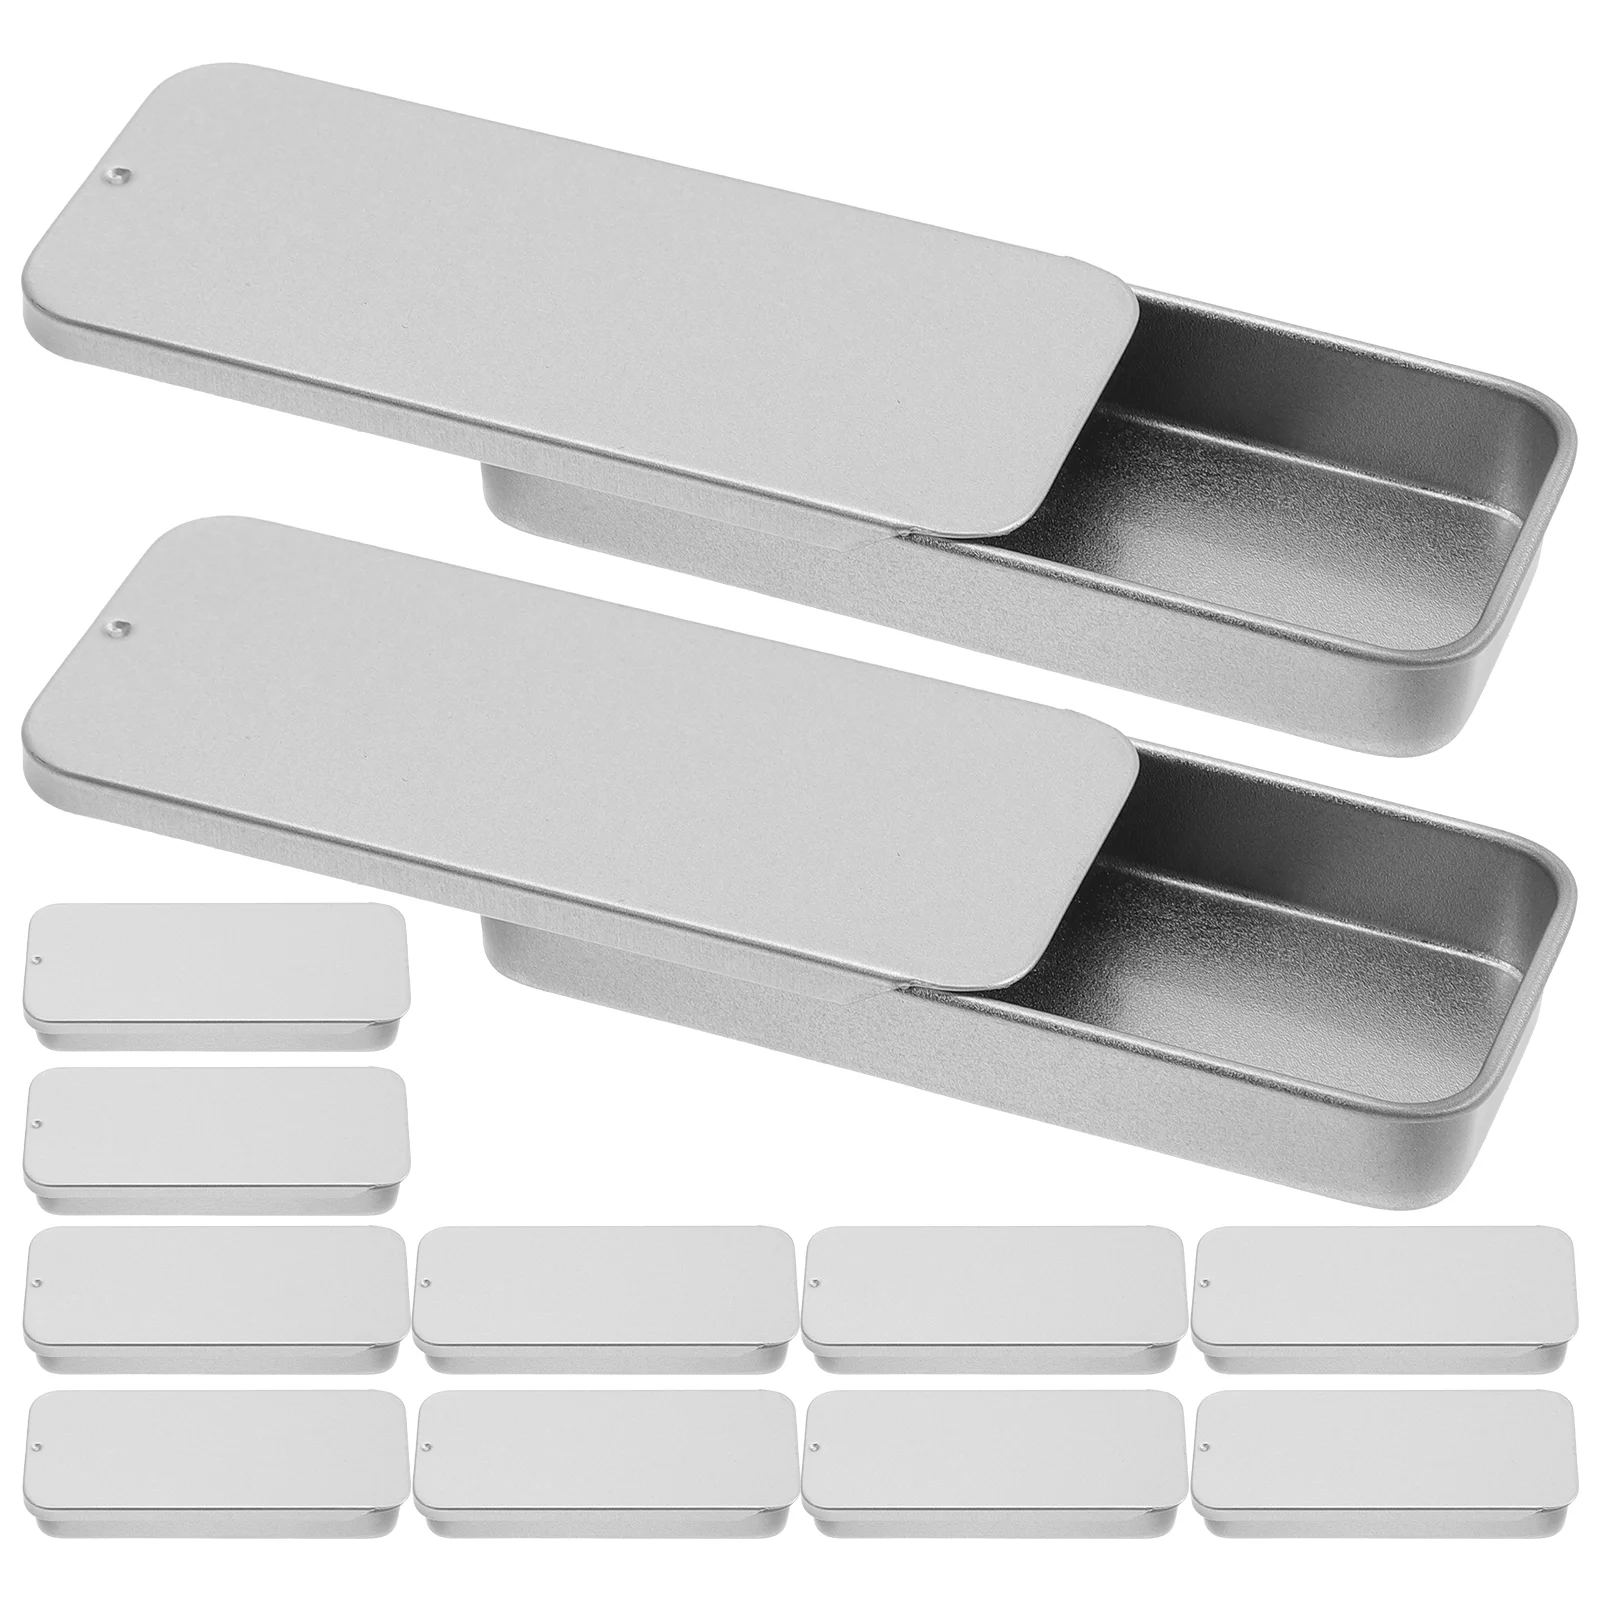 

14 Pcs Cotton Swab Holder Home Floss Storage Cases Desktop Stand Dental Tinplate Picks Dispenser Travel Container